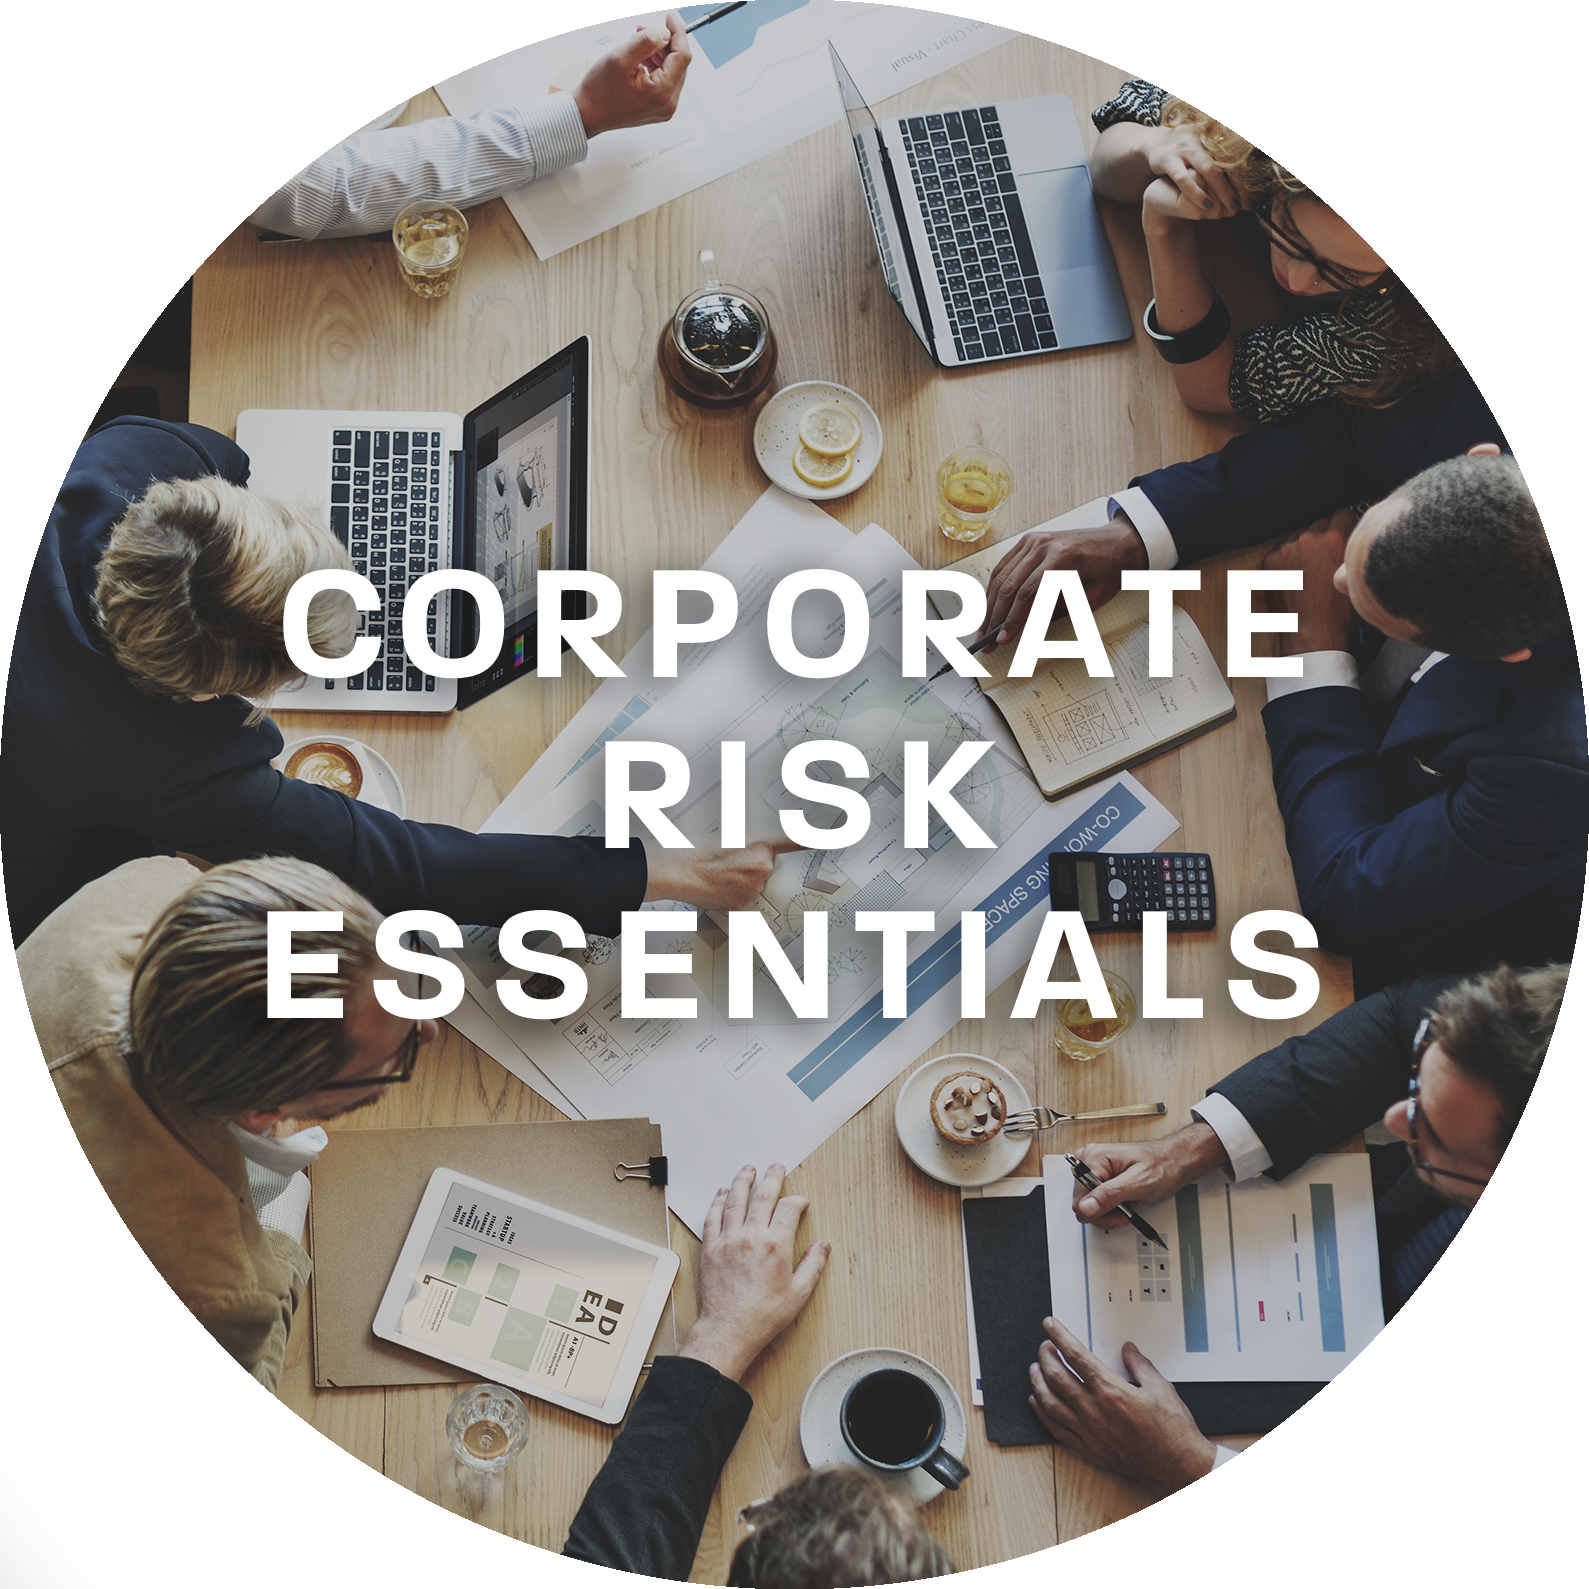 IOSH Corporate Risk Essentials.png